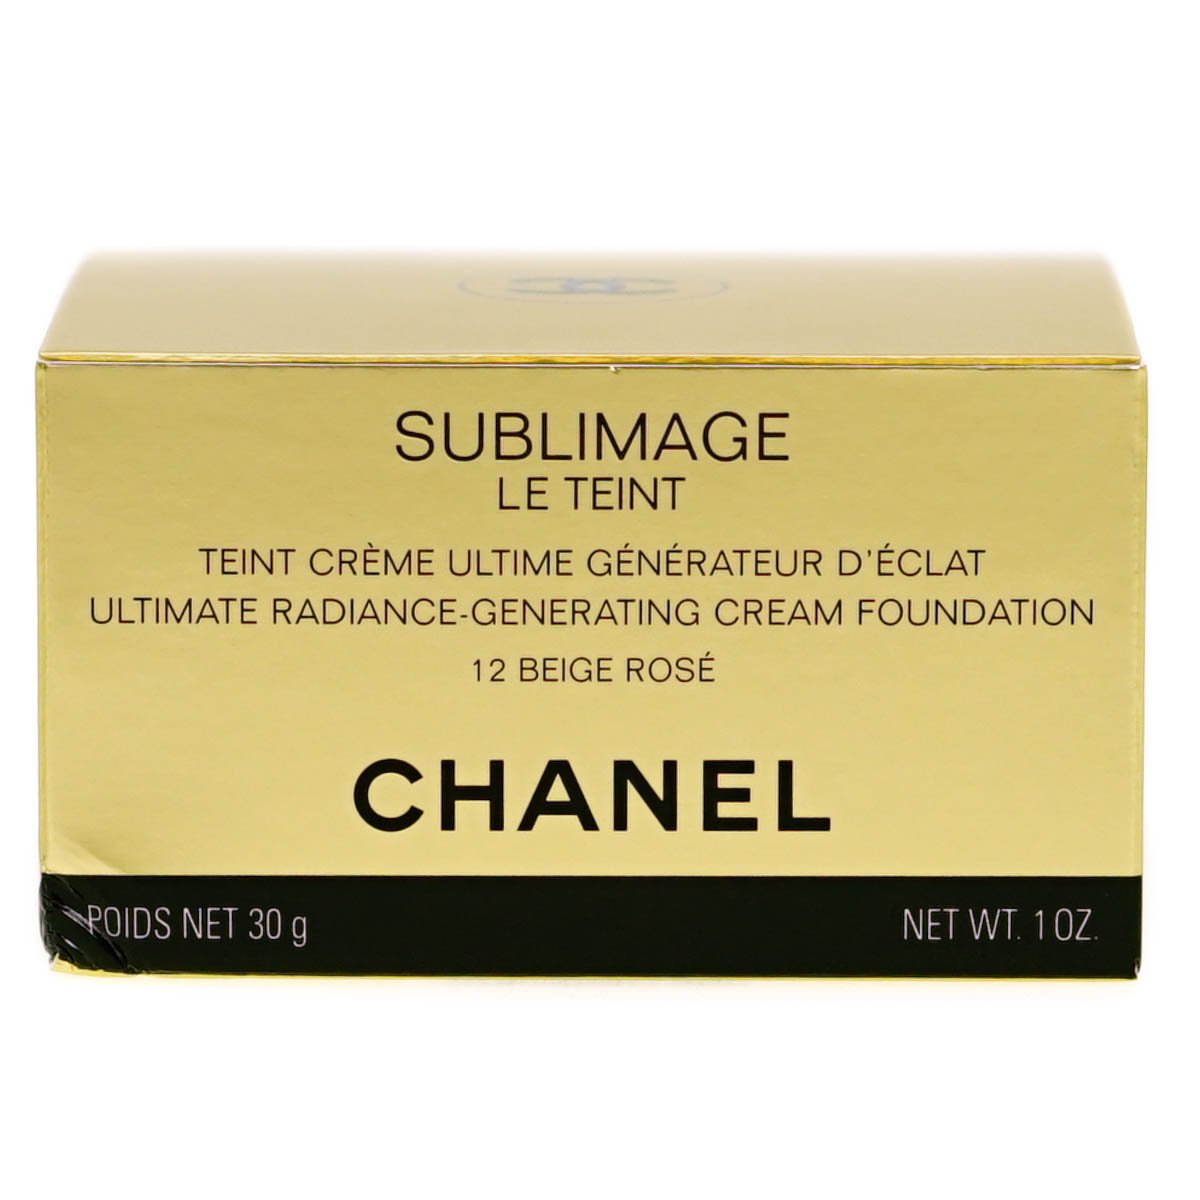 CHANEL SUBLIMAGE LE TEINT Ultimate Radiance-Generating Cream